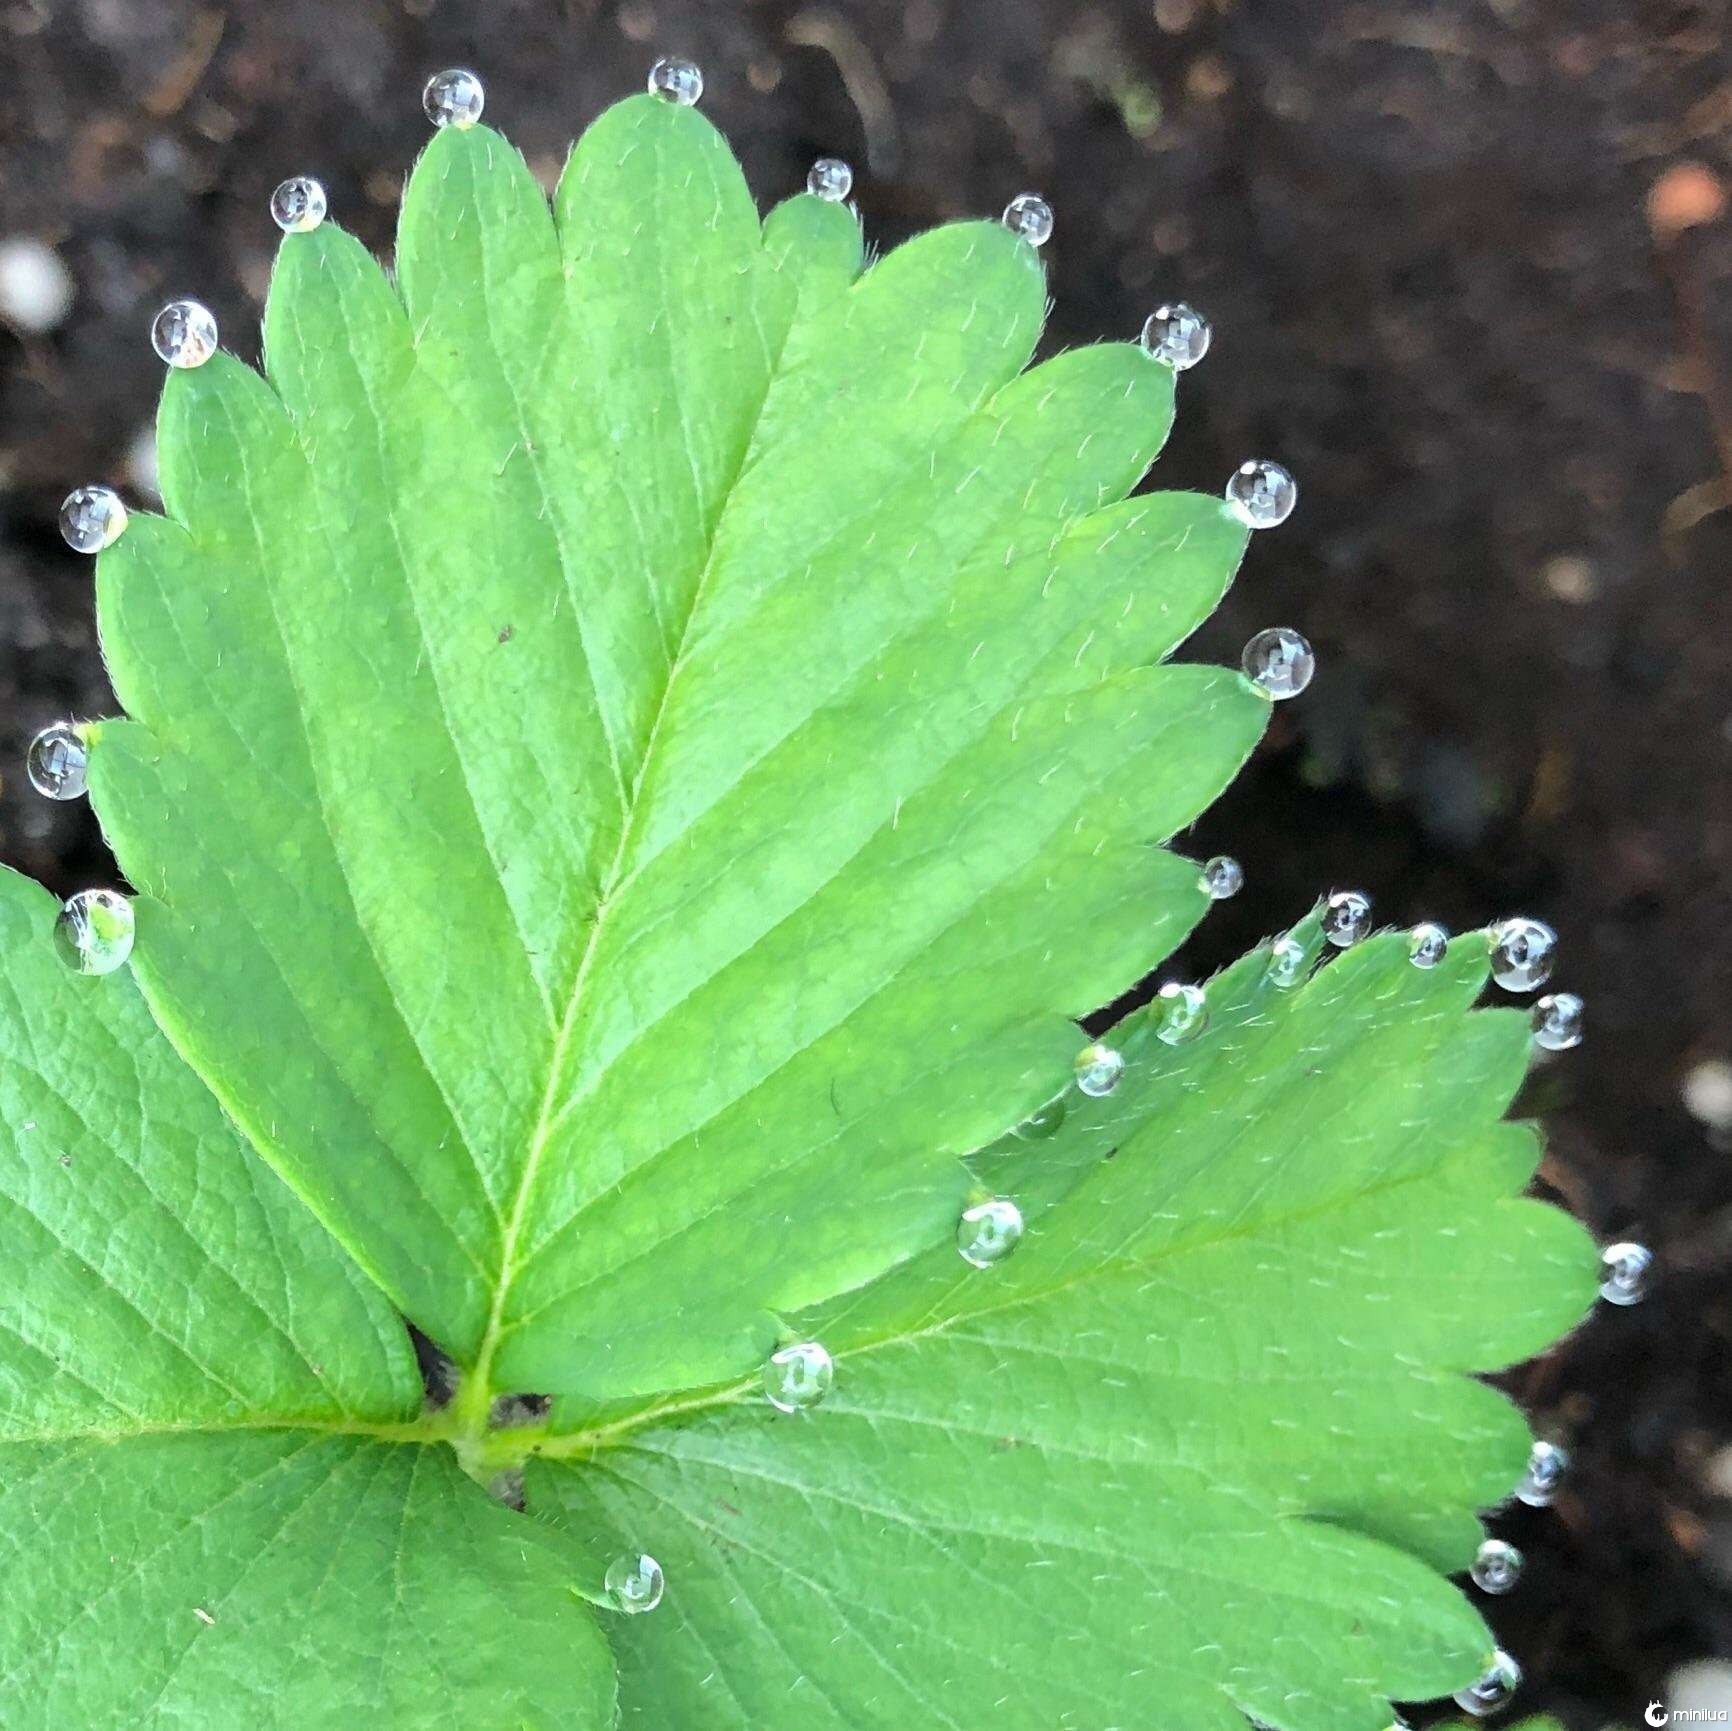 Yes, we know itâs a leaf, but just look at the perfect way those droplets formed around the plant.